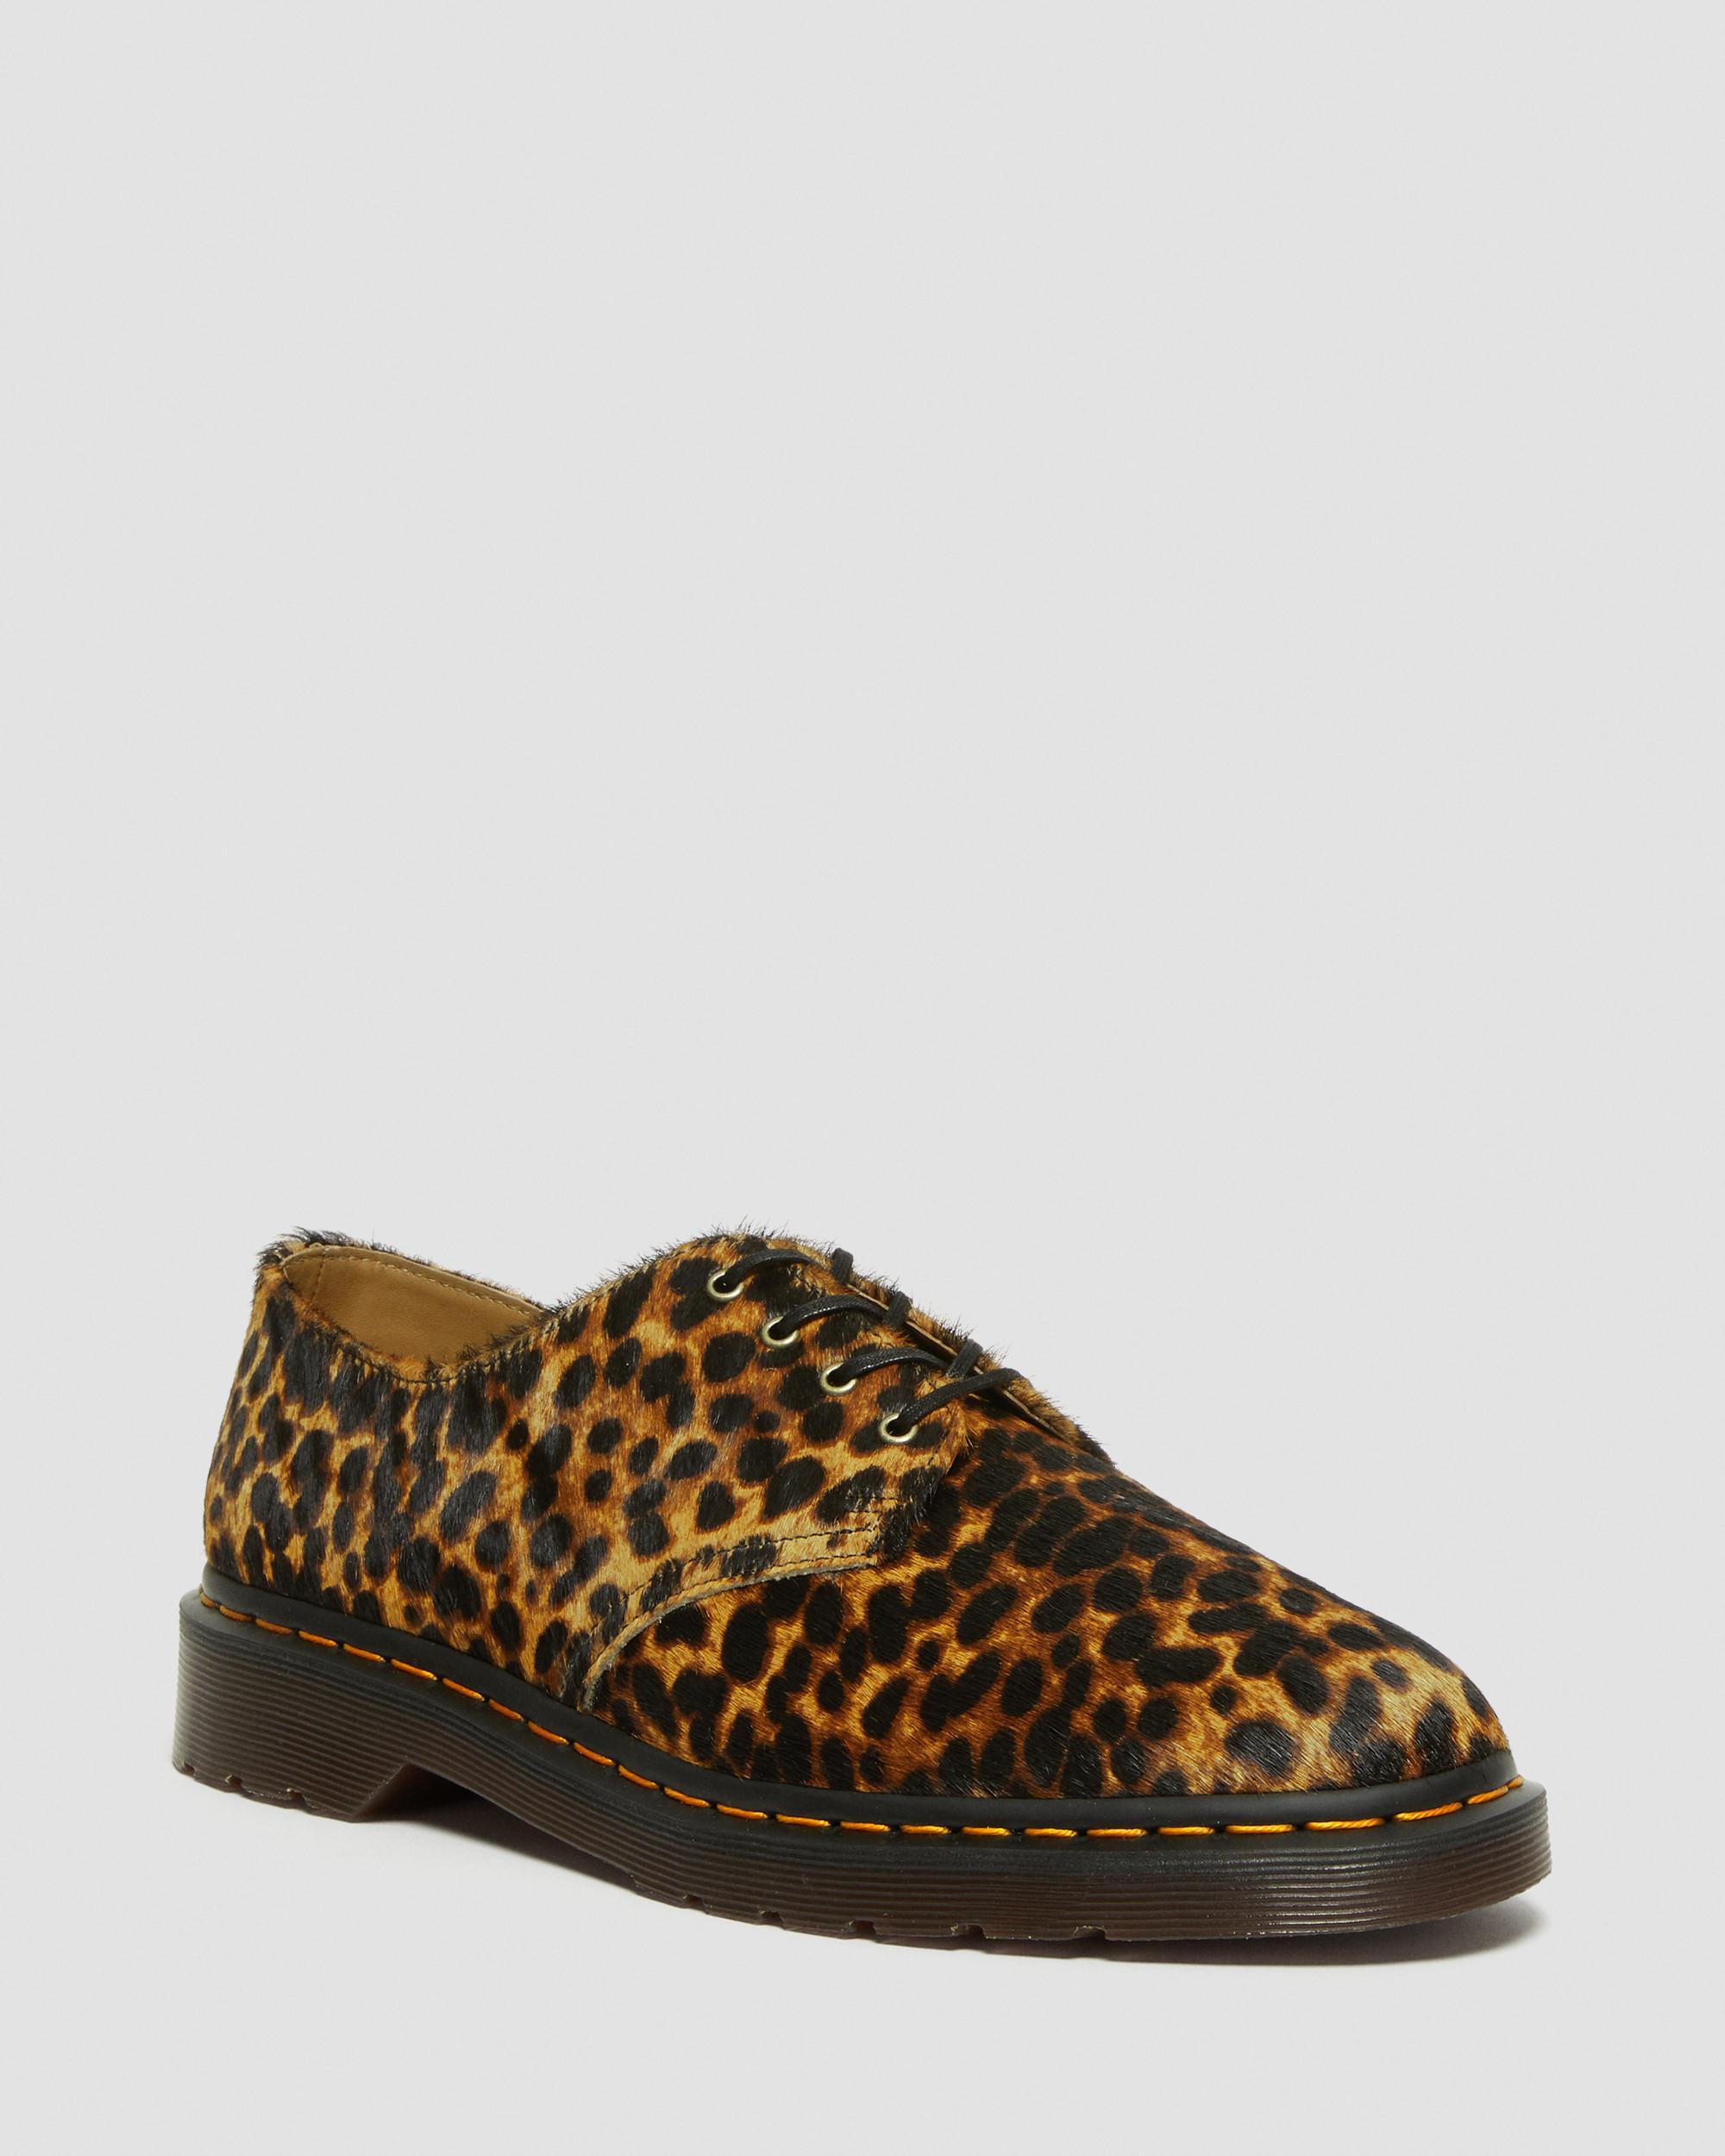 Fashion Leopard Shoes Flat-heeled Shoes Pointed Shoes Leisure for Women  Ladies (Khaki Leopard, Size 40) - Walmart.com